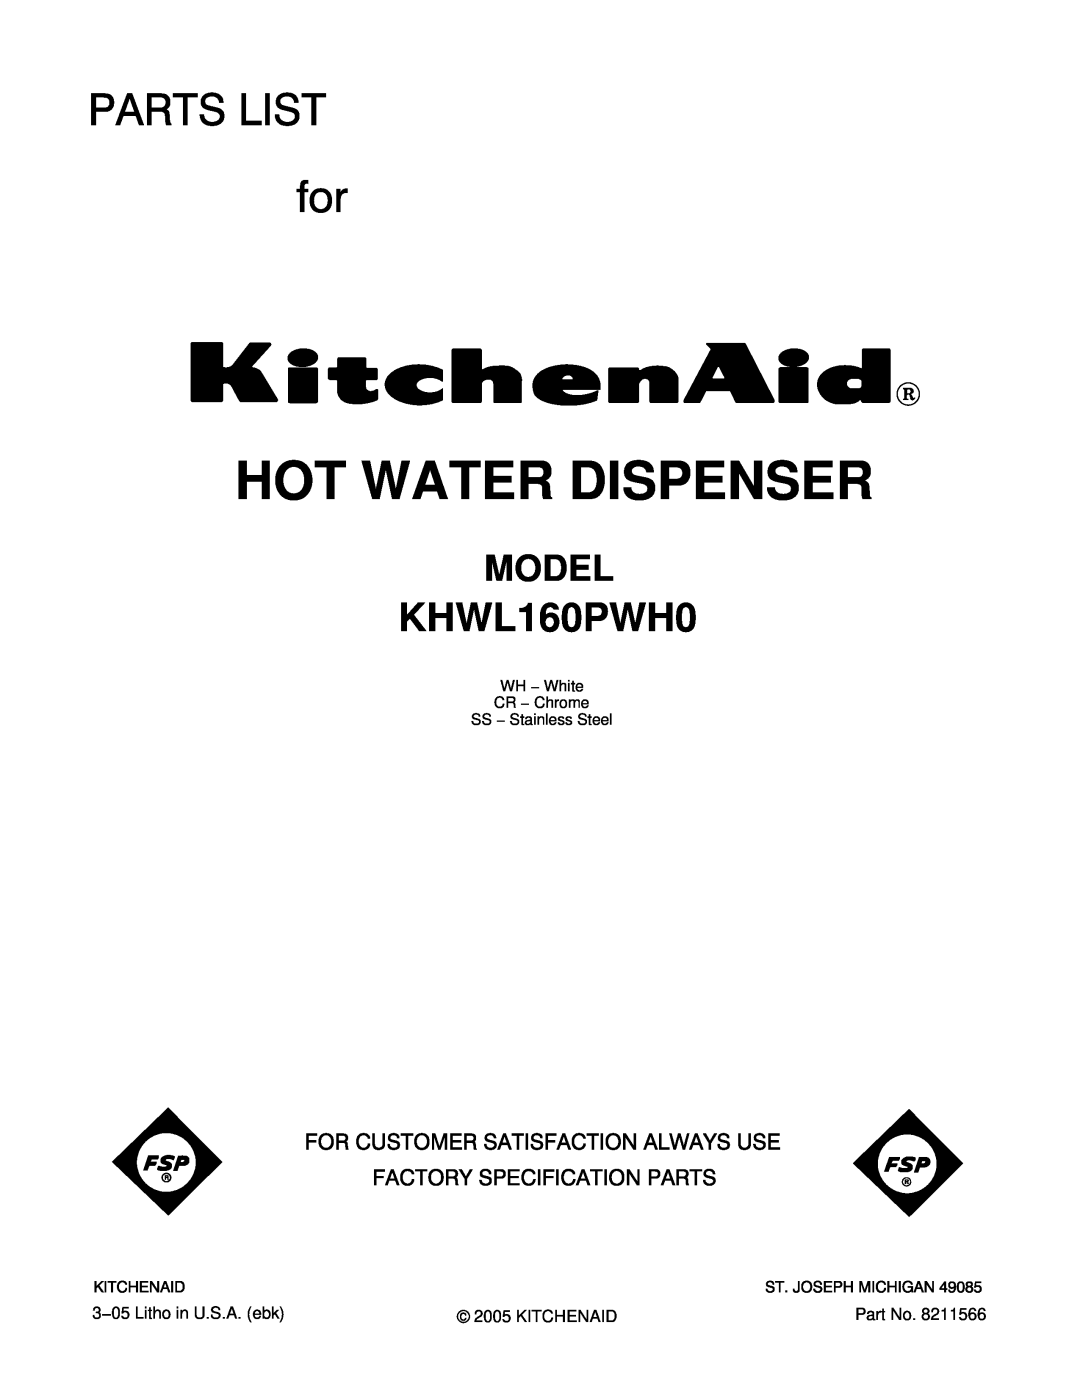 KitchenAid KHWL160PWH0 manual Hot Water Dispenser, Model, WH − White CR − Chrome SS − Stainless Steel 